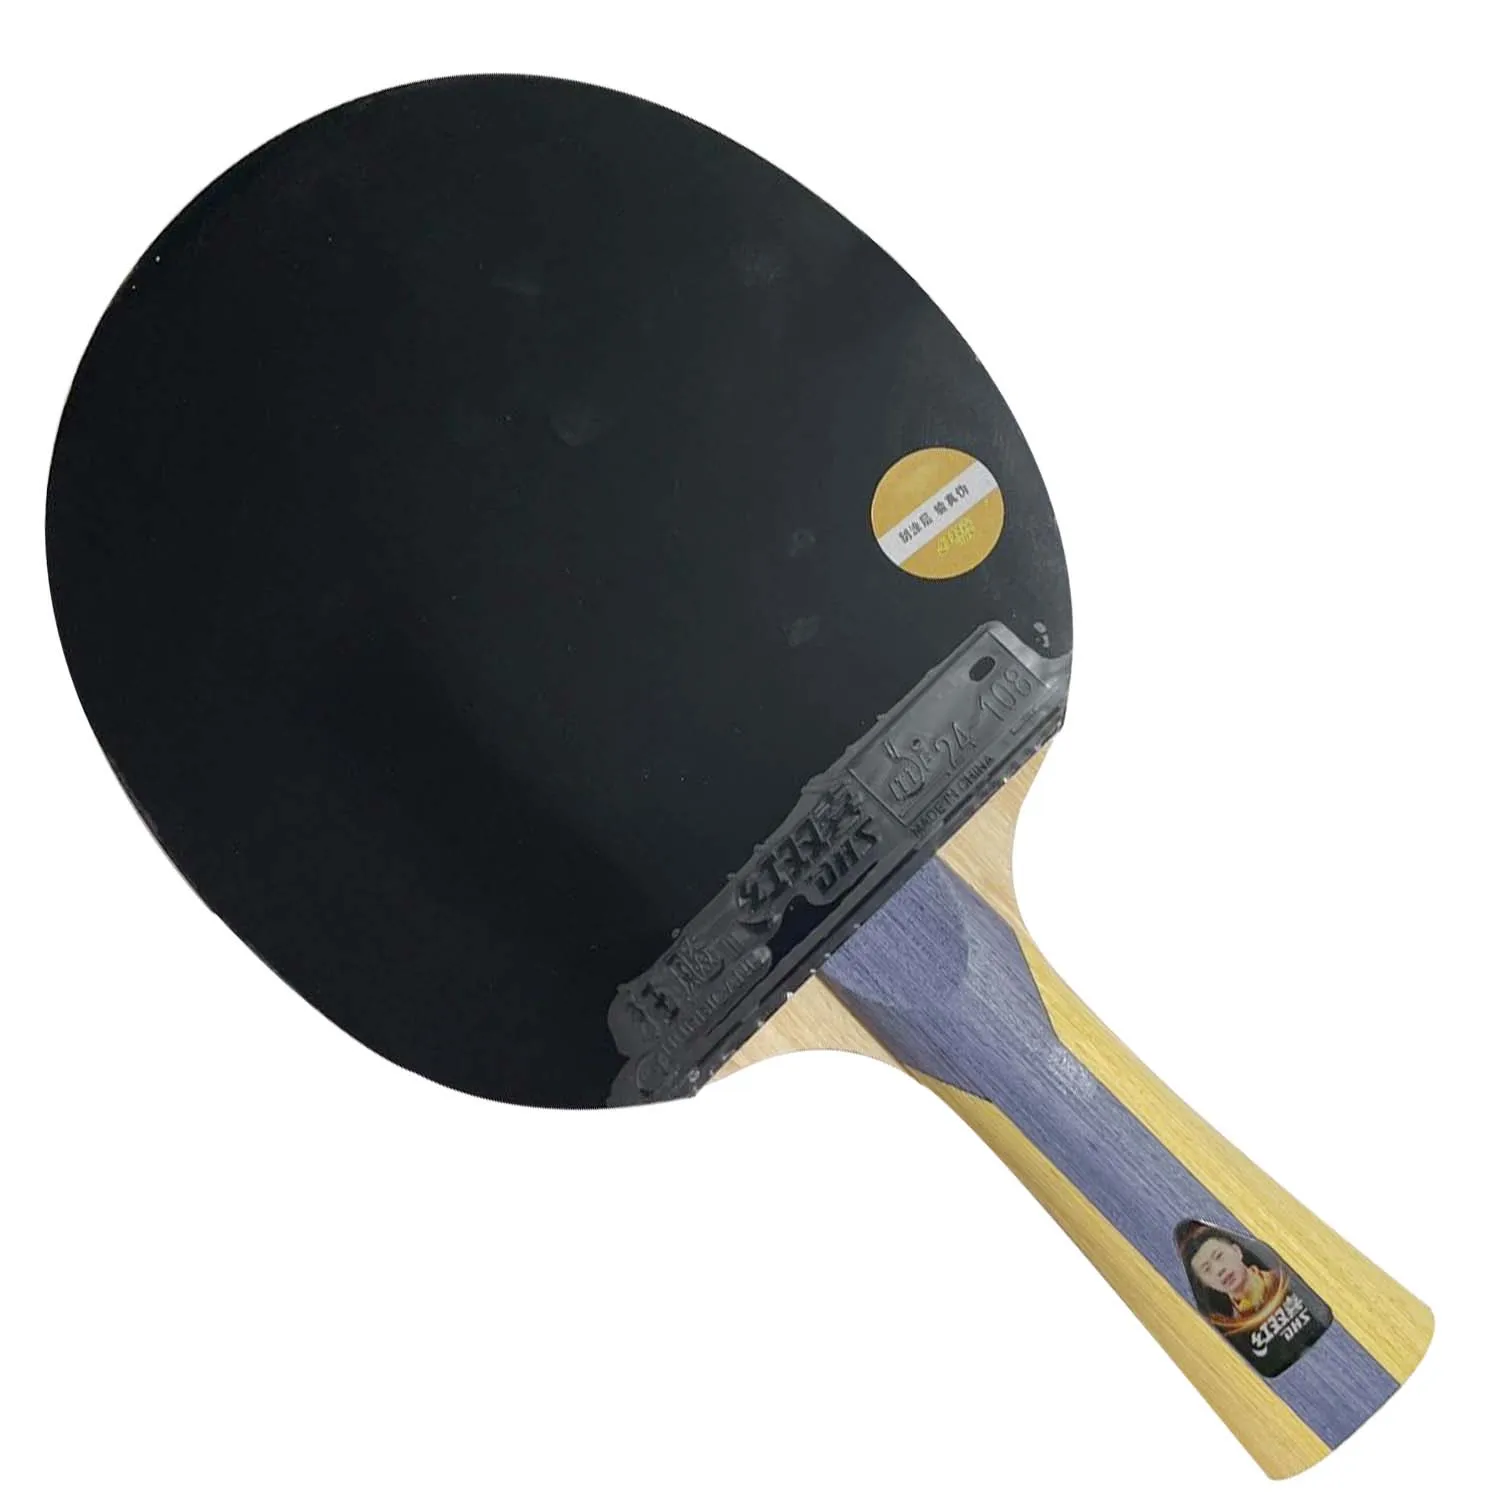 Beginner level long handle shakehand ping pong racket table tennis paddle 